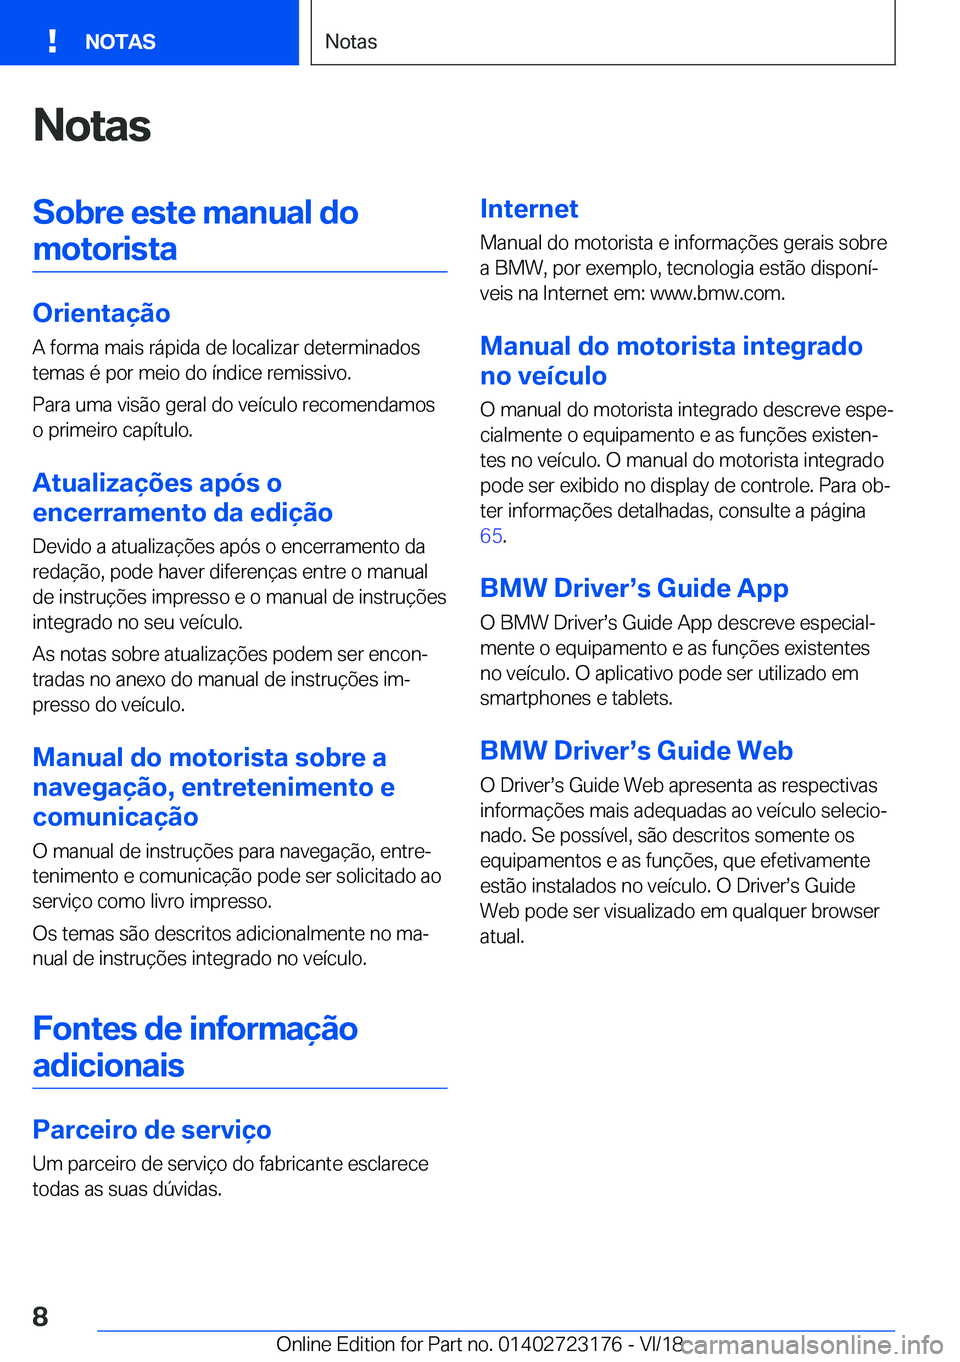 BMW 4 SERIES GRAN COUPE 2019  Manual do condutor (in Portuguese) �N�o�t�a�s�S�o�b�r�e��e�s�t�e��m�a�n�u�a�l��d�o�m�o�t�o�r�i�s�t�a
�O�r�i�e�n�t�a�